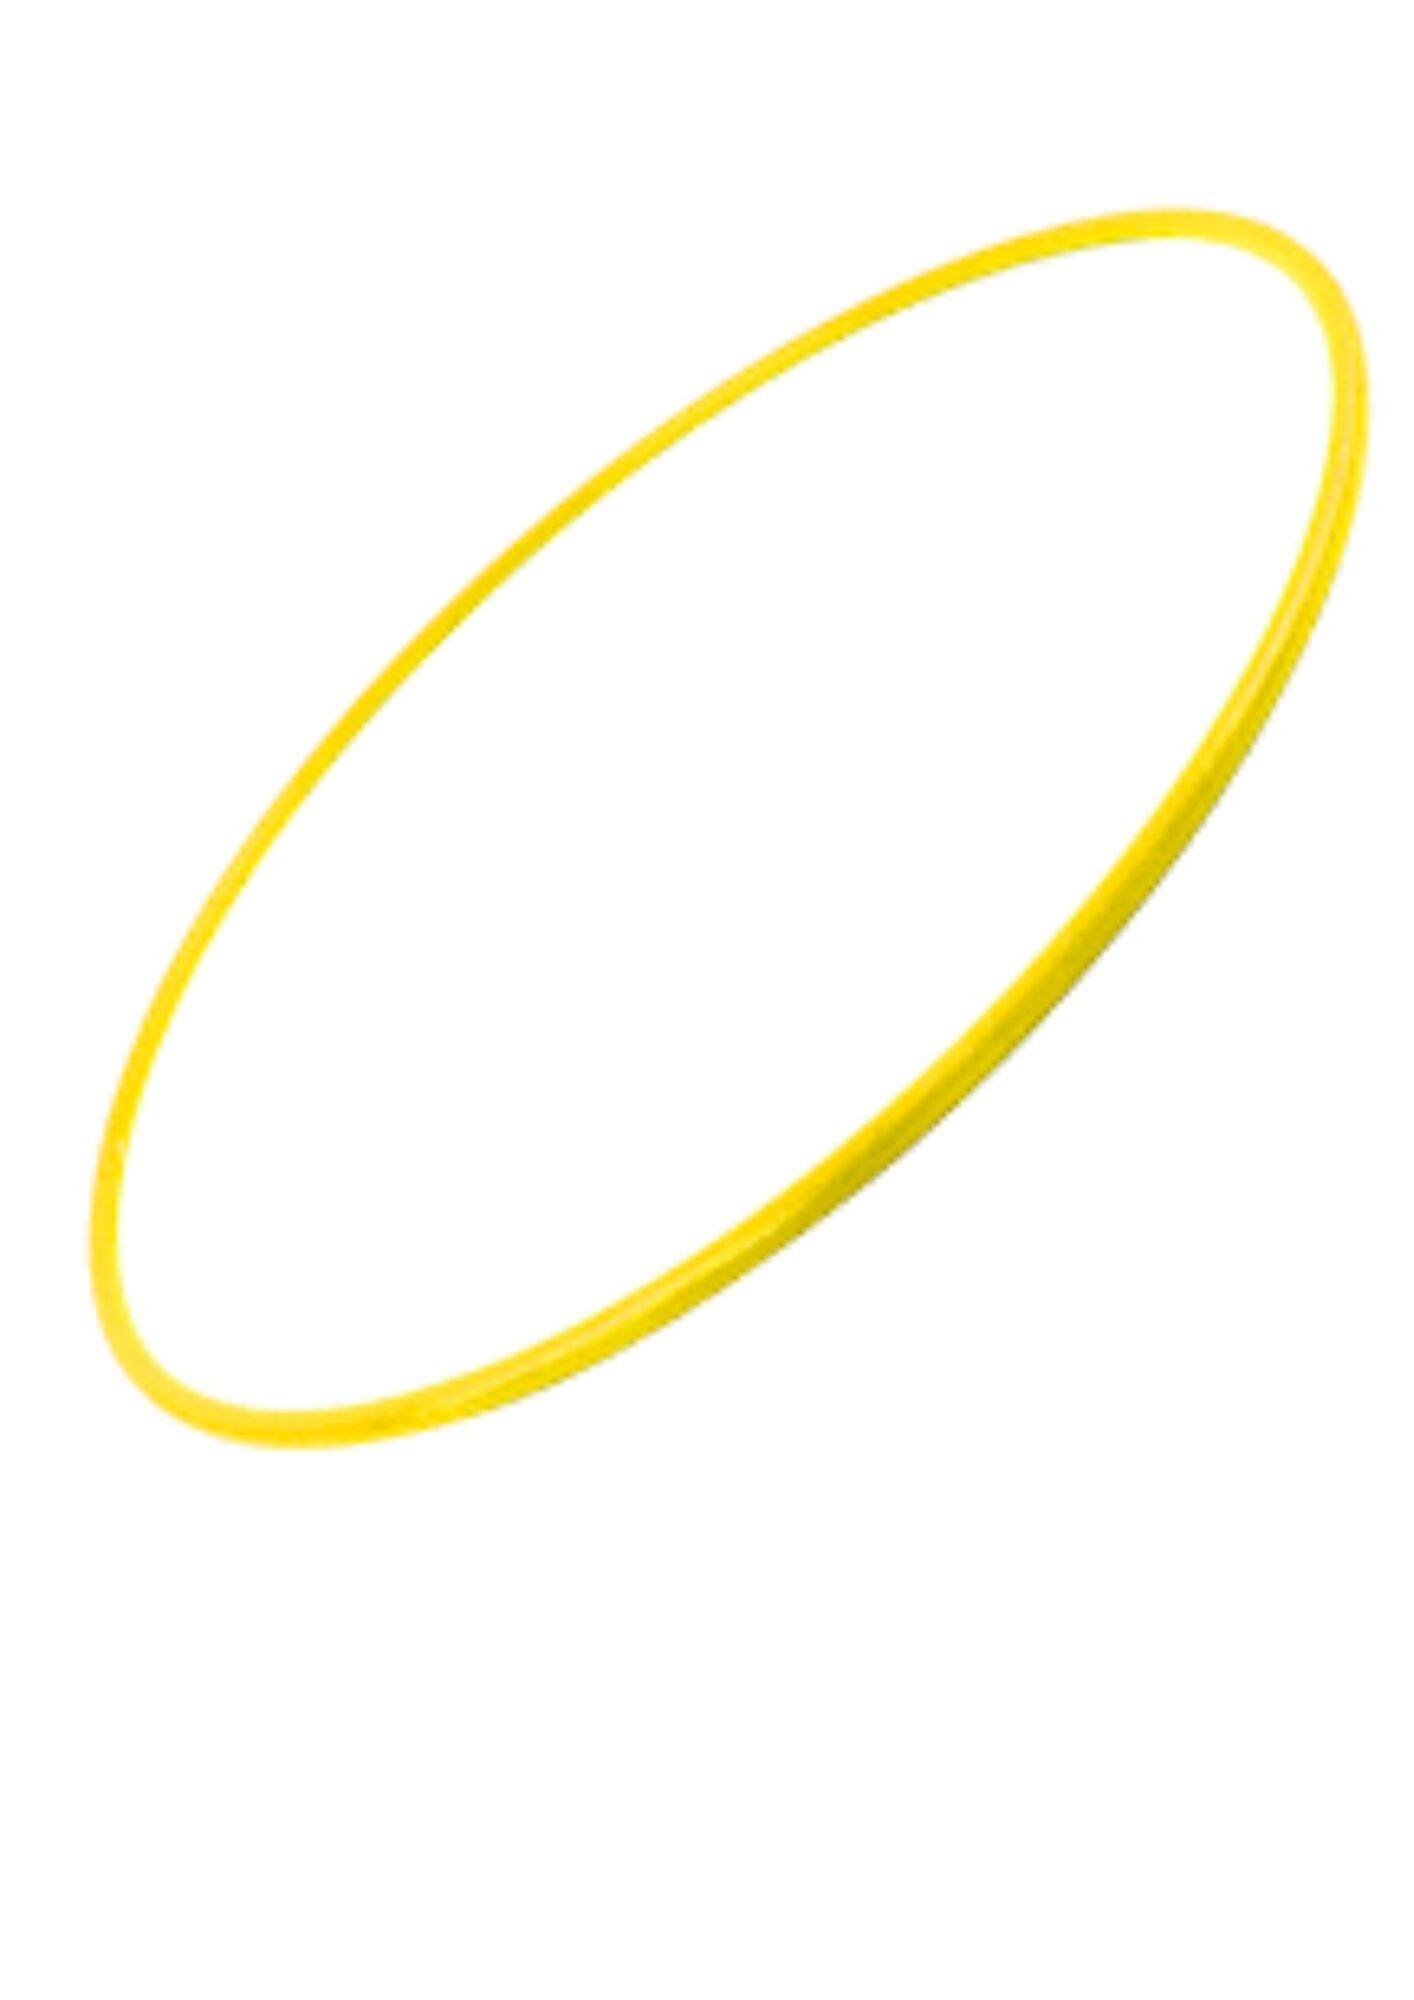 Children Big Hula Hoop Yellow (24'')(60cm)